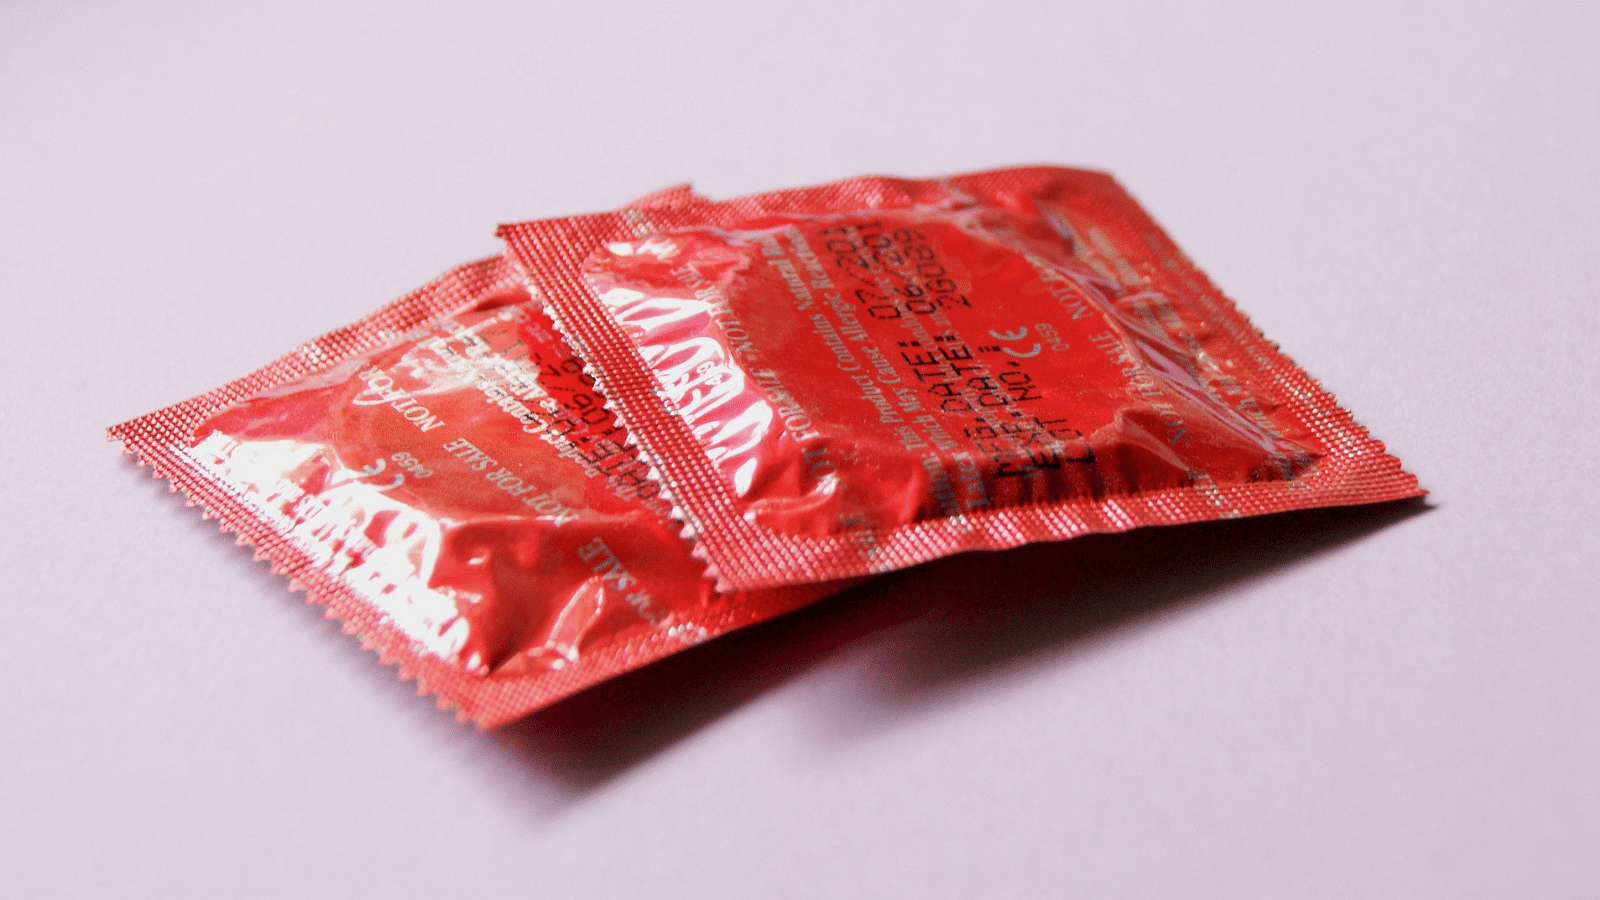 <div class="paragraphs"><p>Thailand is planning to distribute 95 million free condoms.</p></div>